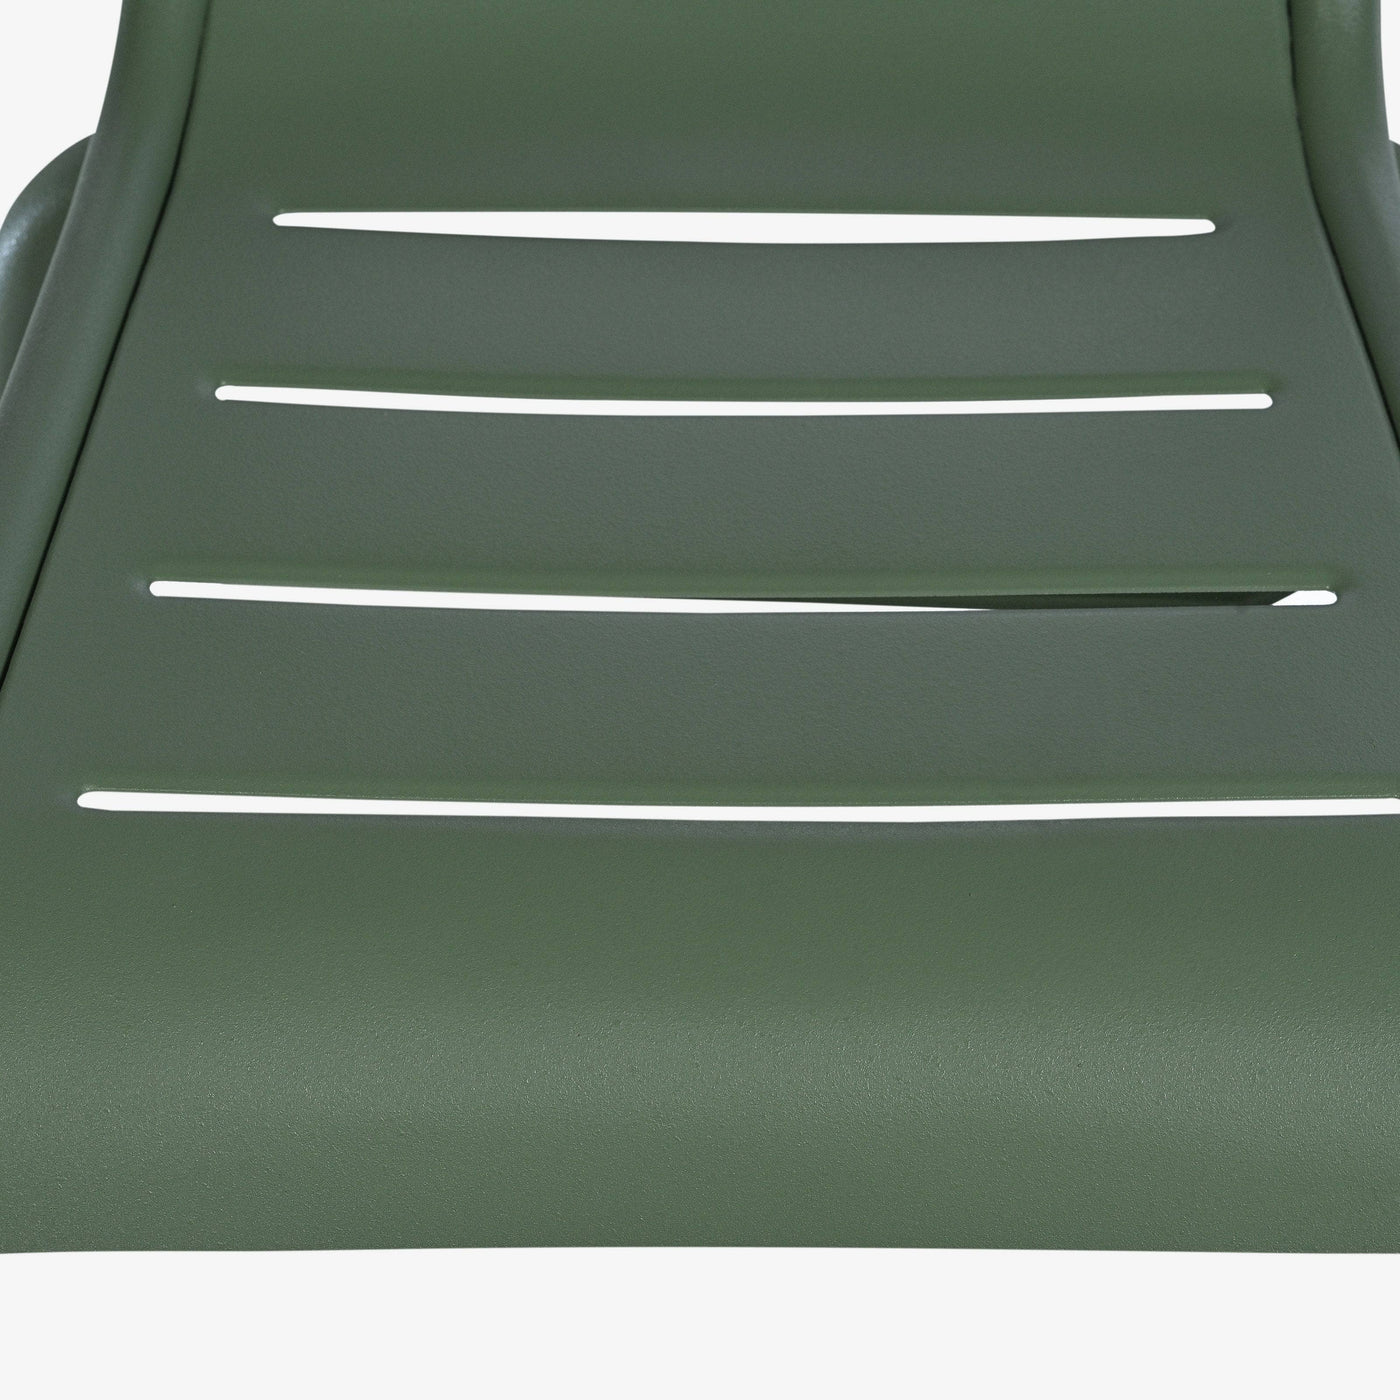 Rosta Stackable Aluminium Garden Chair, Olive Green Garden Chairs sazy.com